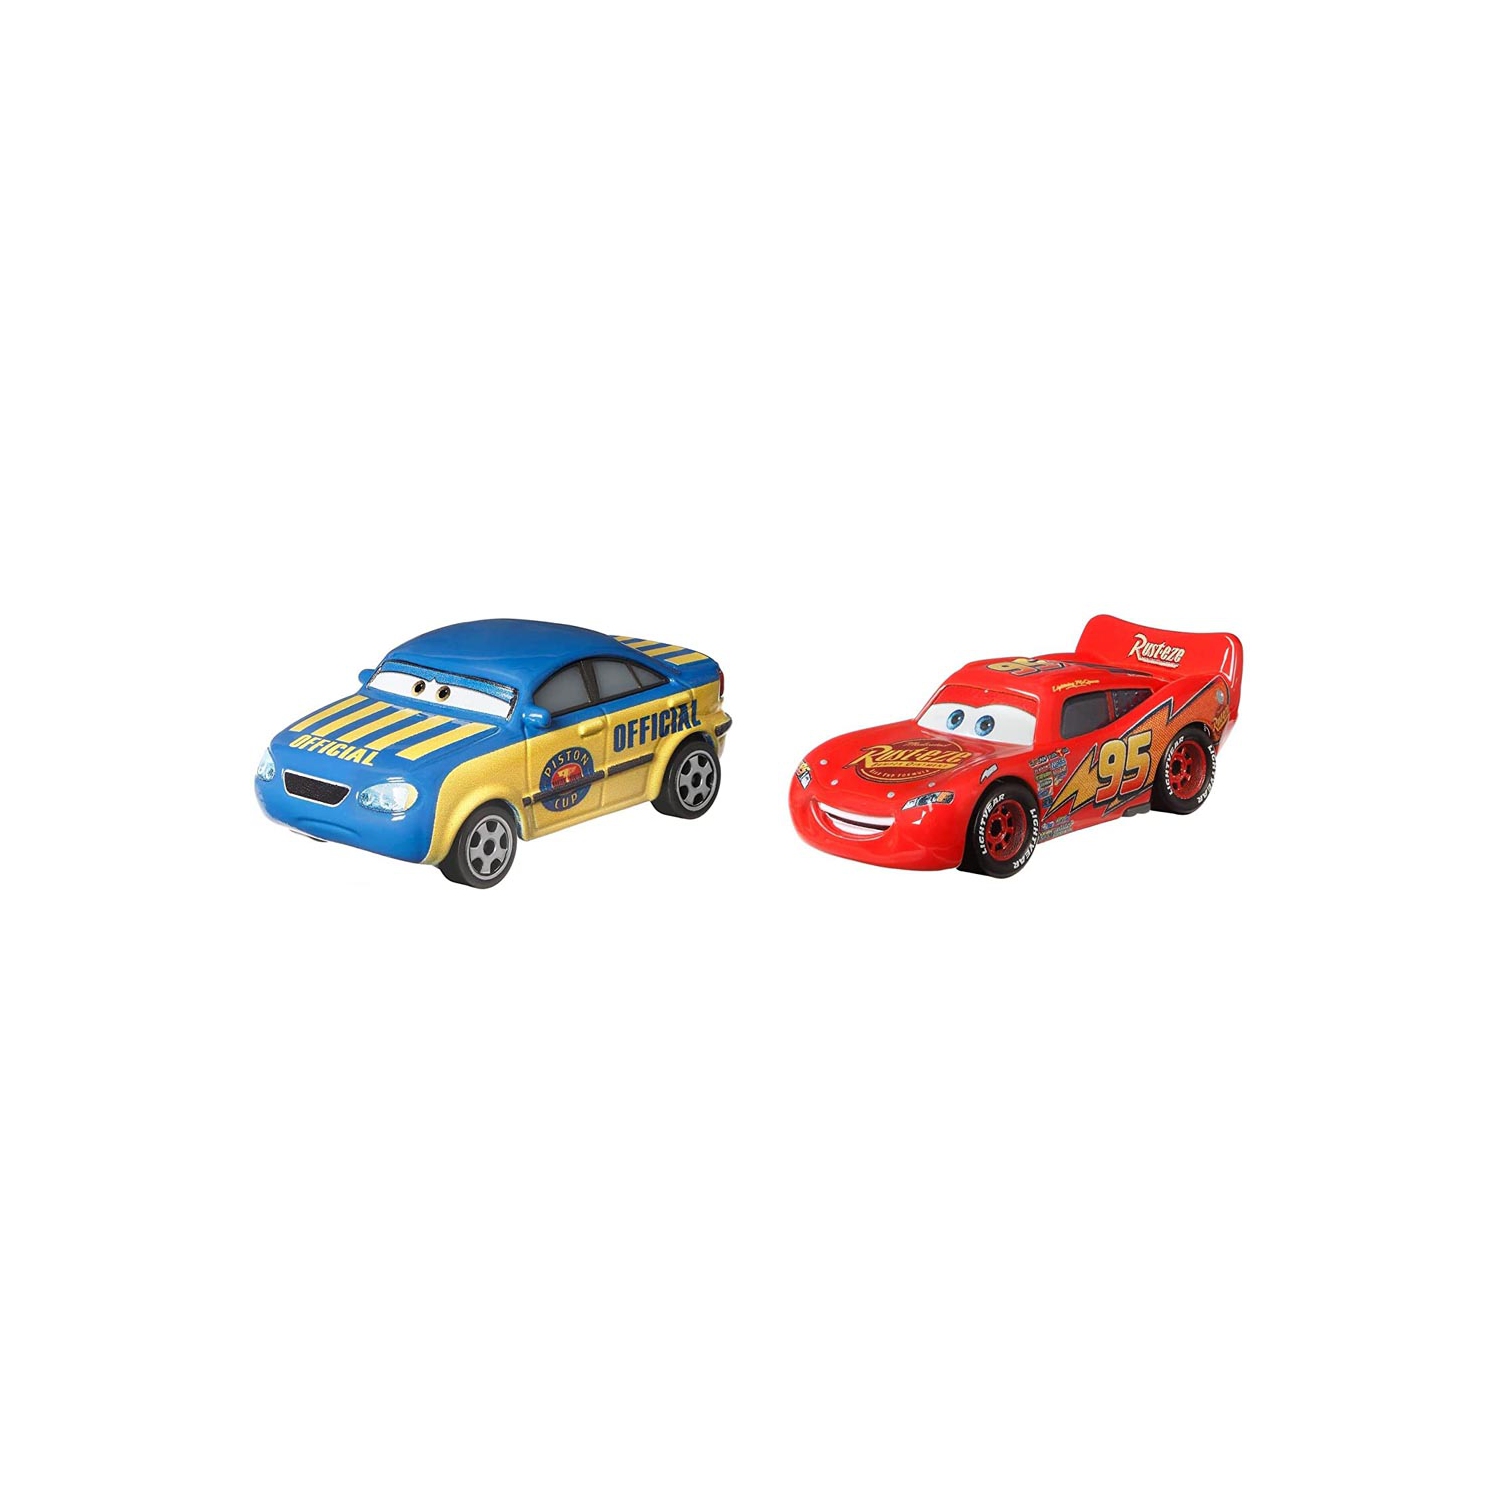 Disney Pixar Cars 3, Race Official Tom & Lightning McQueen 2-Pack, 1:55 Scale Die-Cast